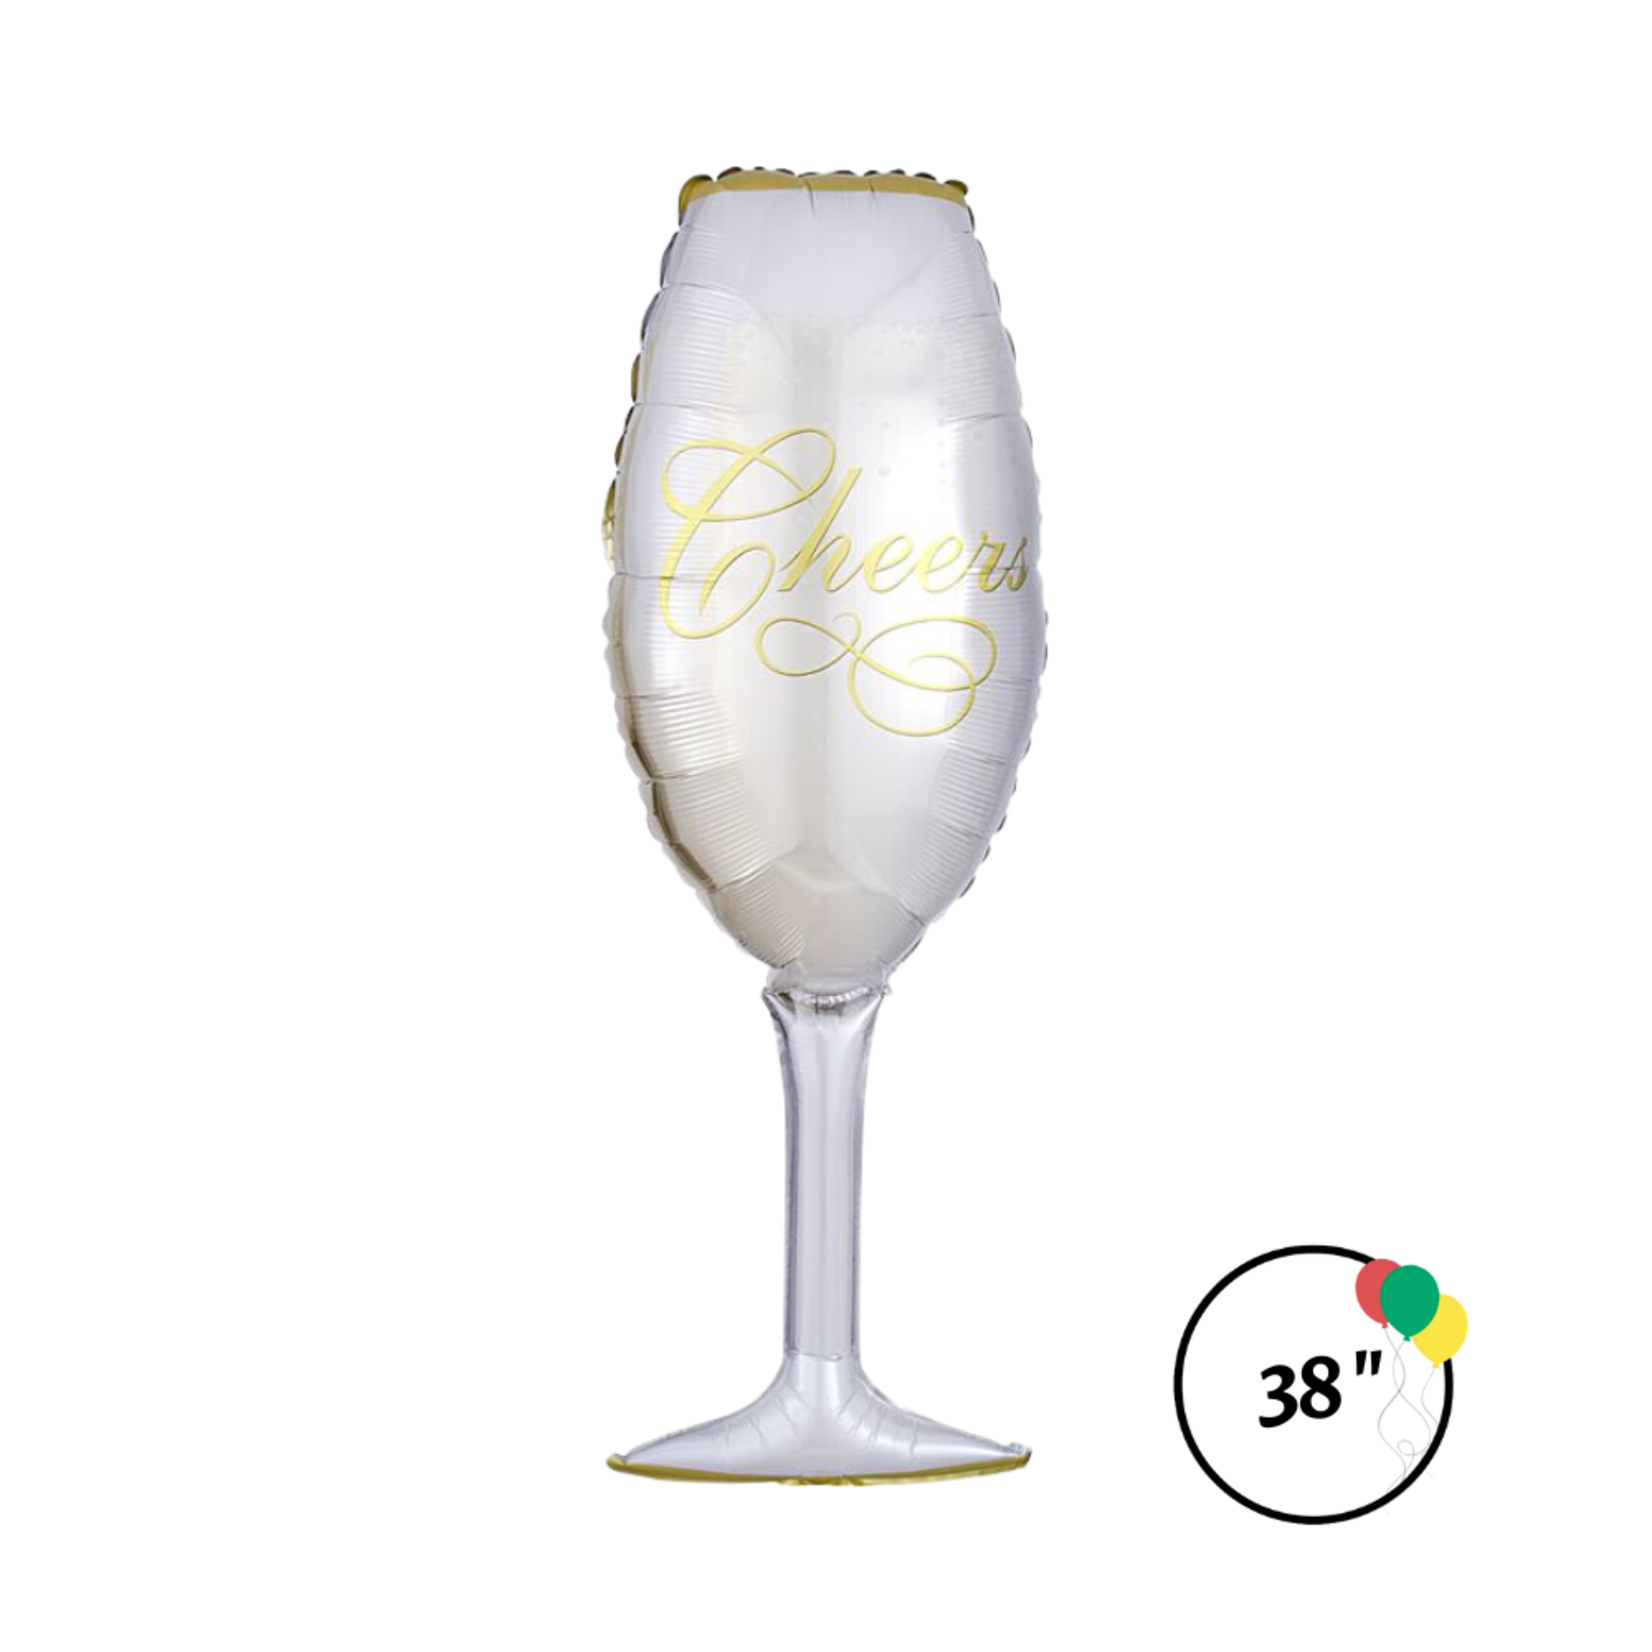 38" Cheers Champagne Glass Balloon